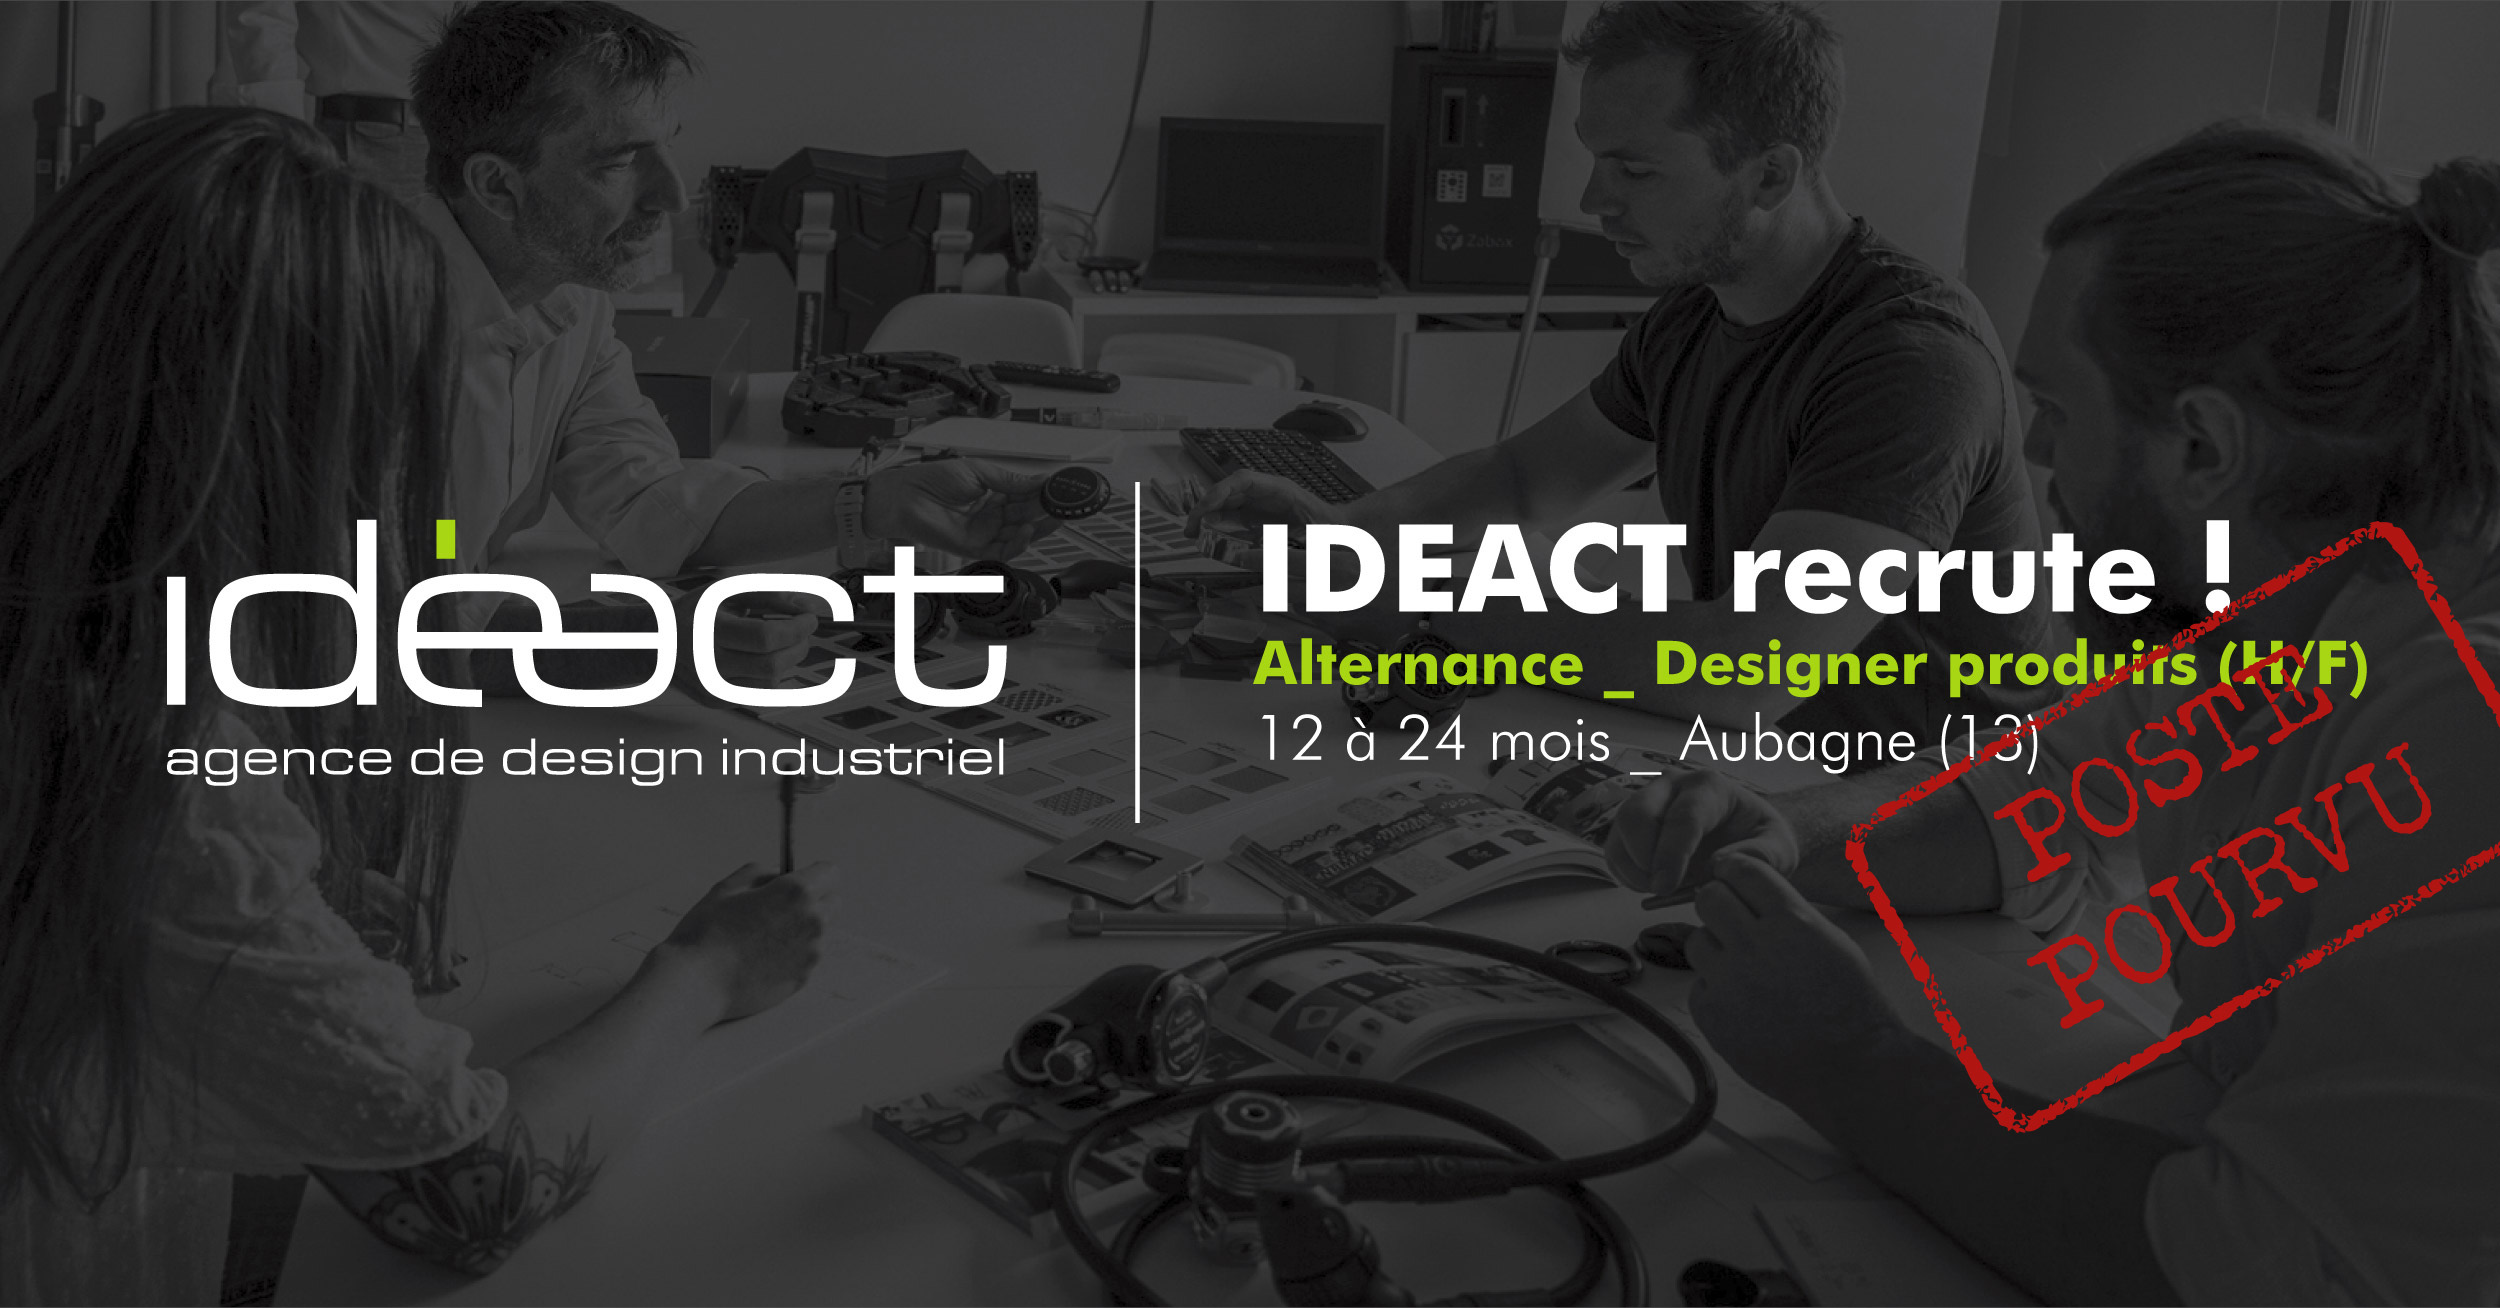 IDEACT recrute alternance design produit industriel